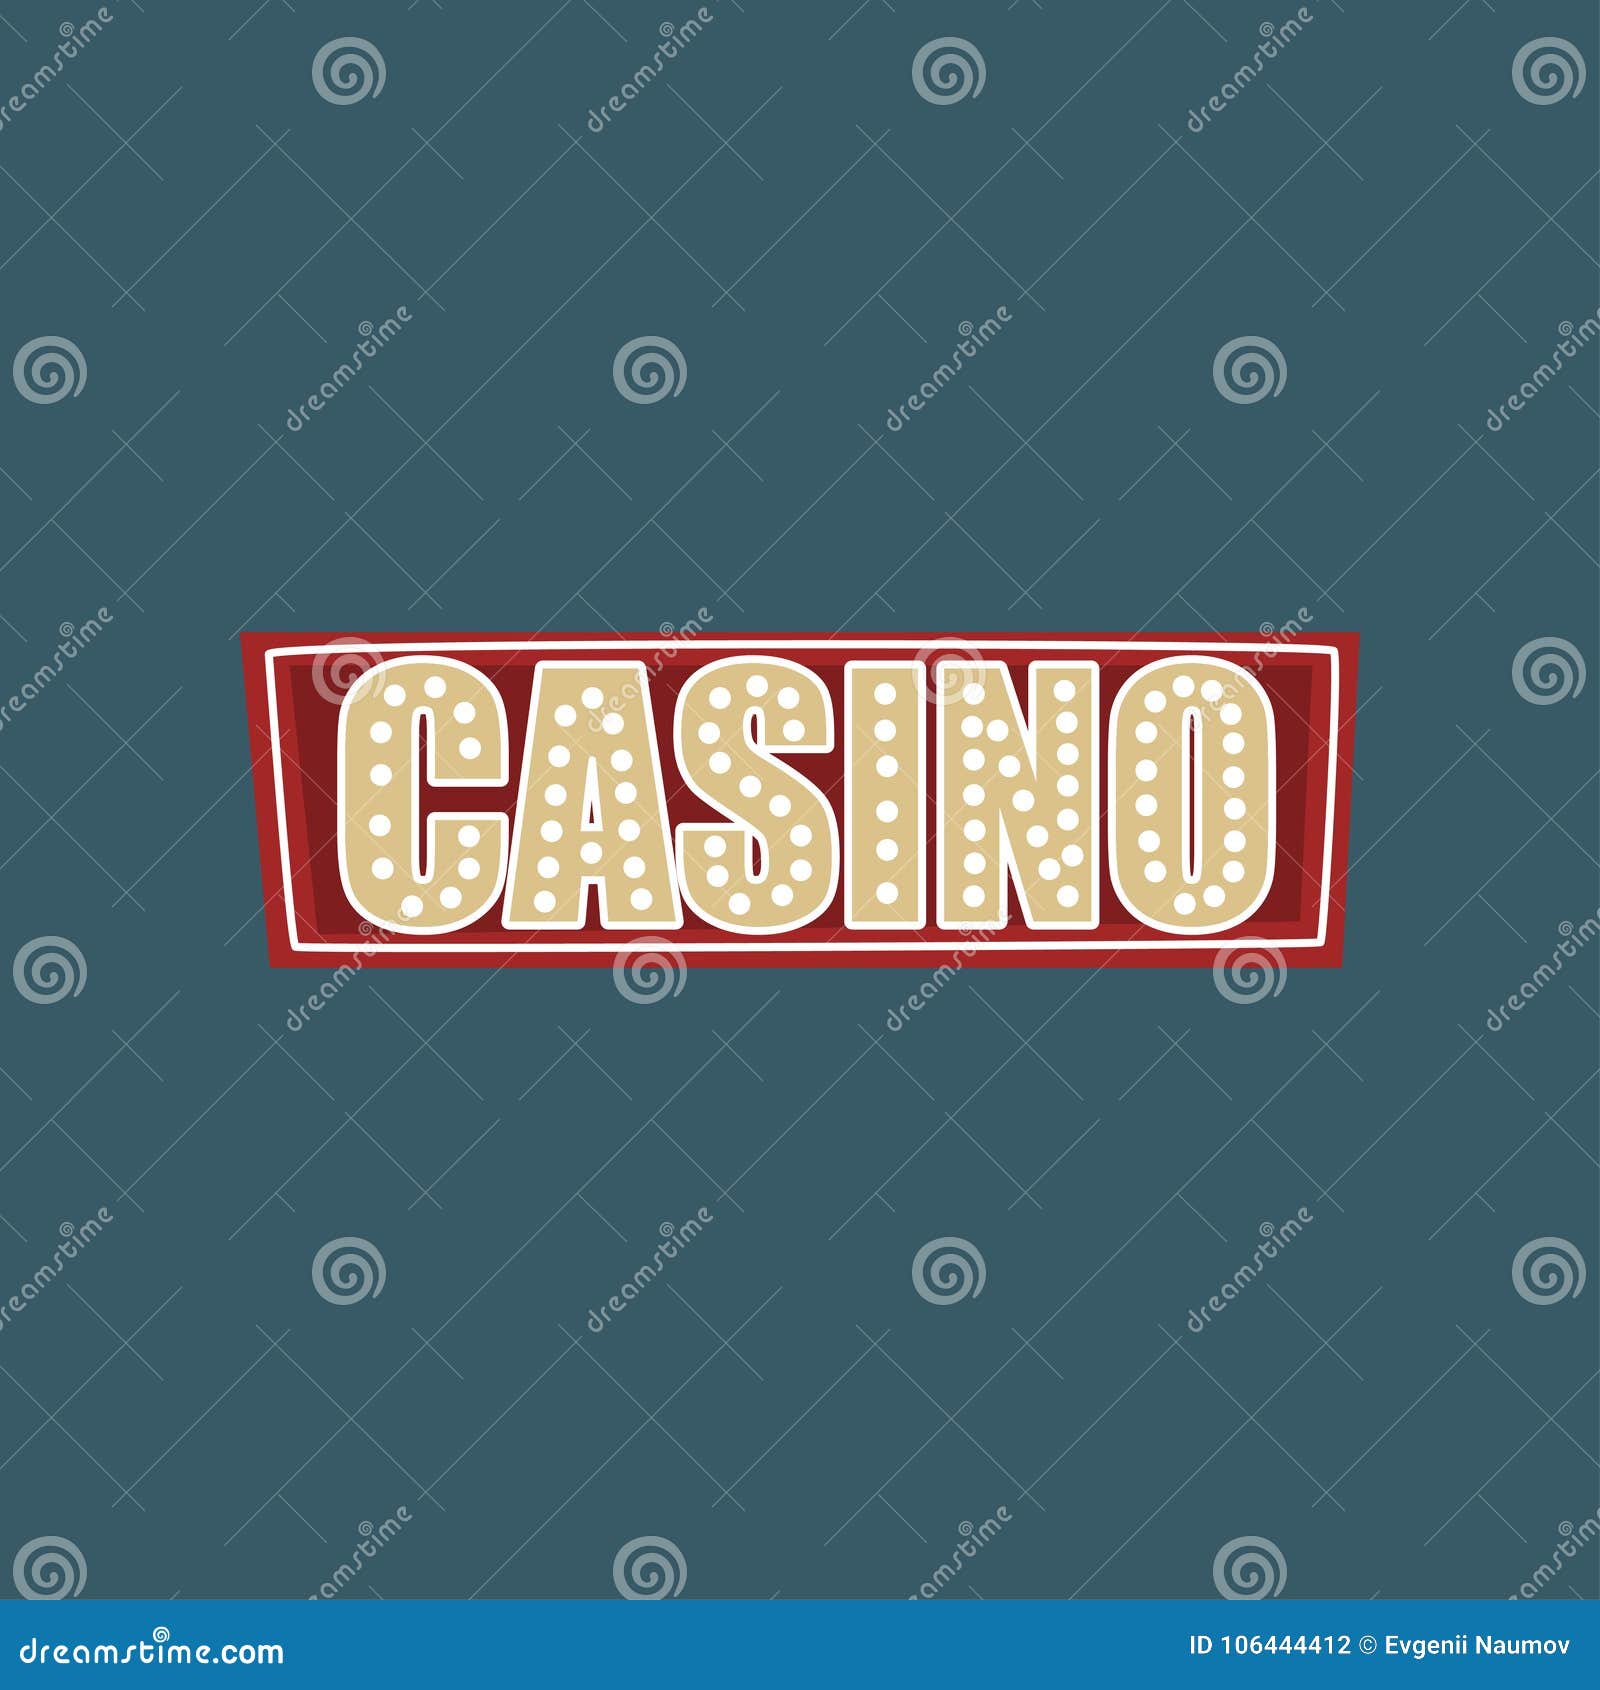 Retro new casino без верификации